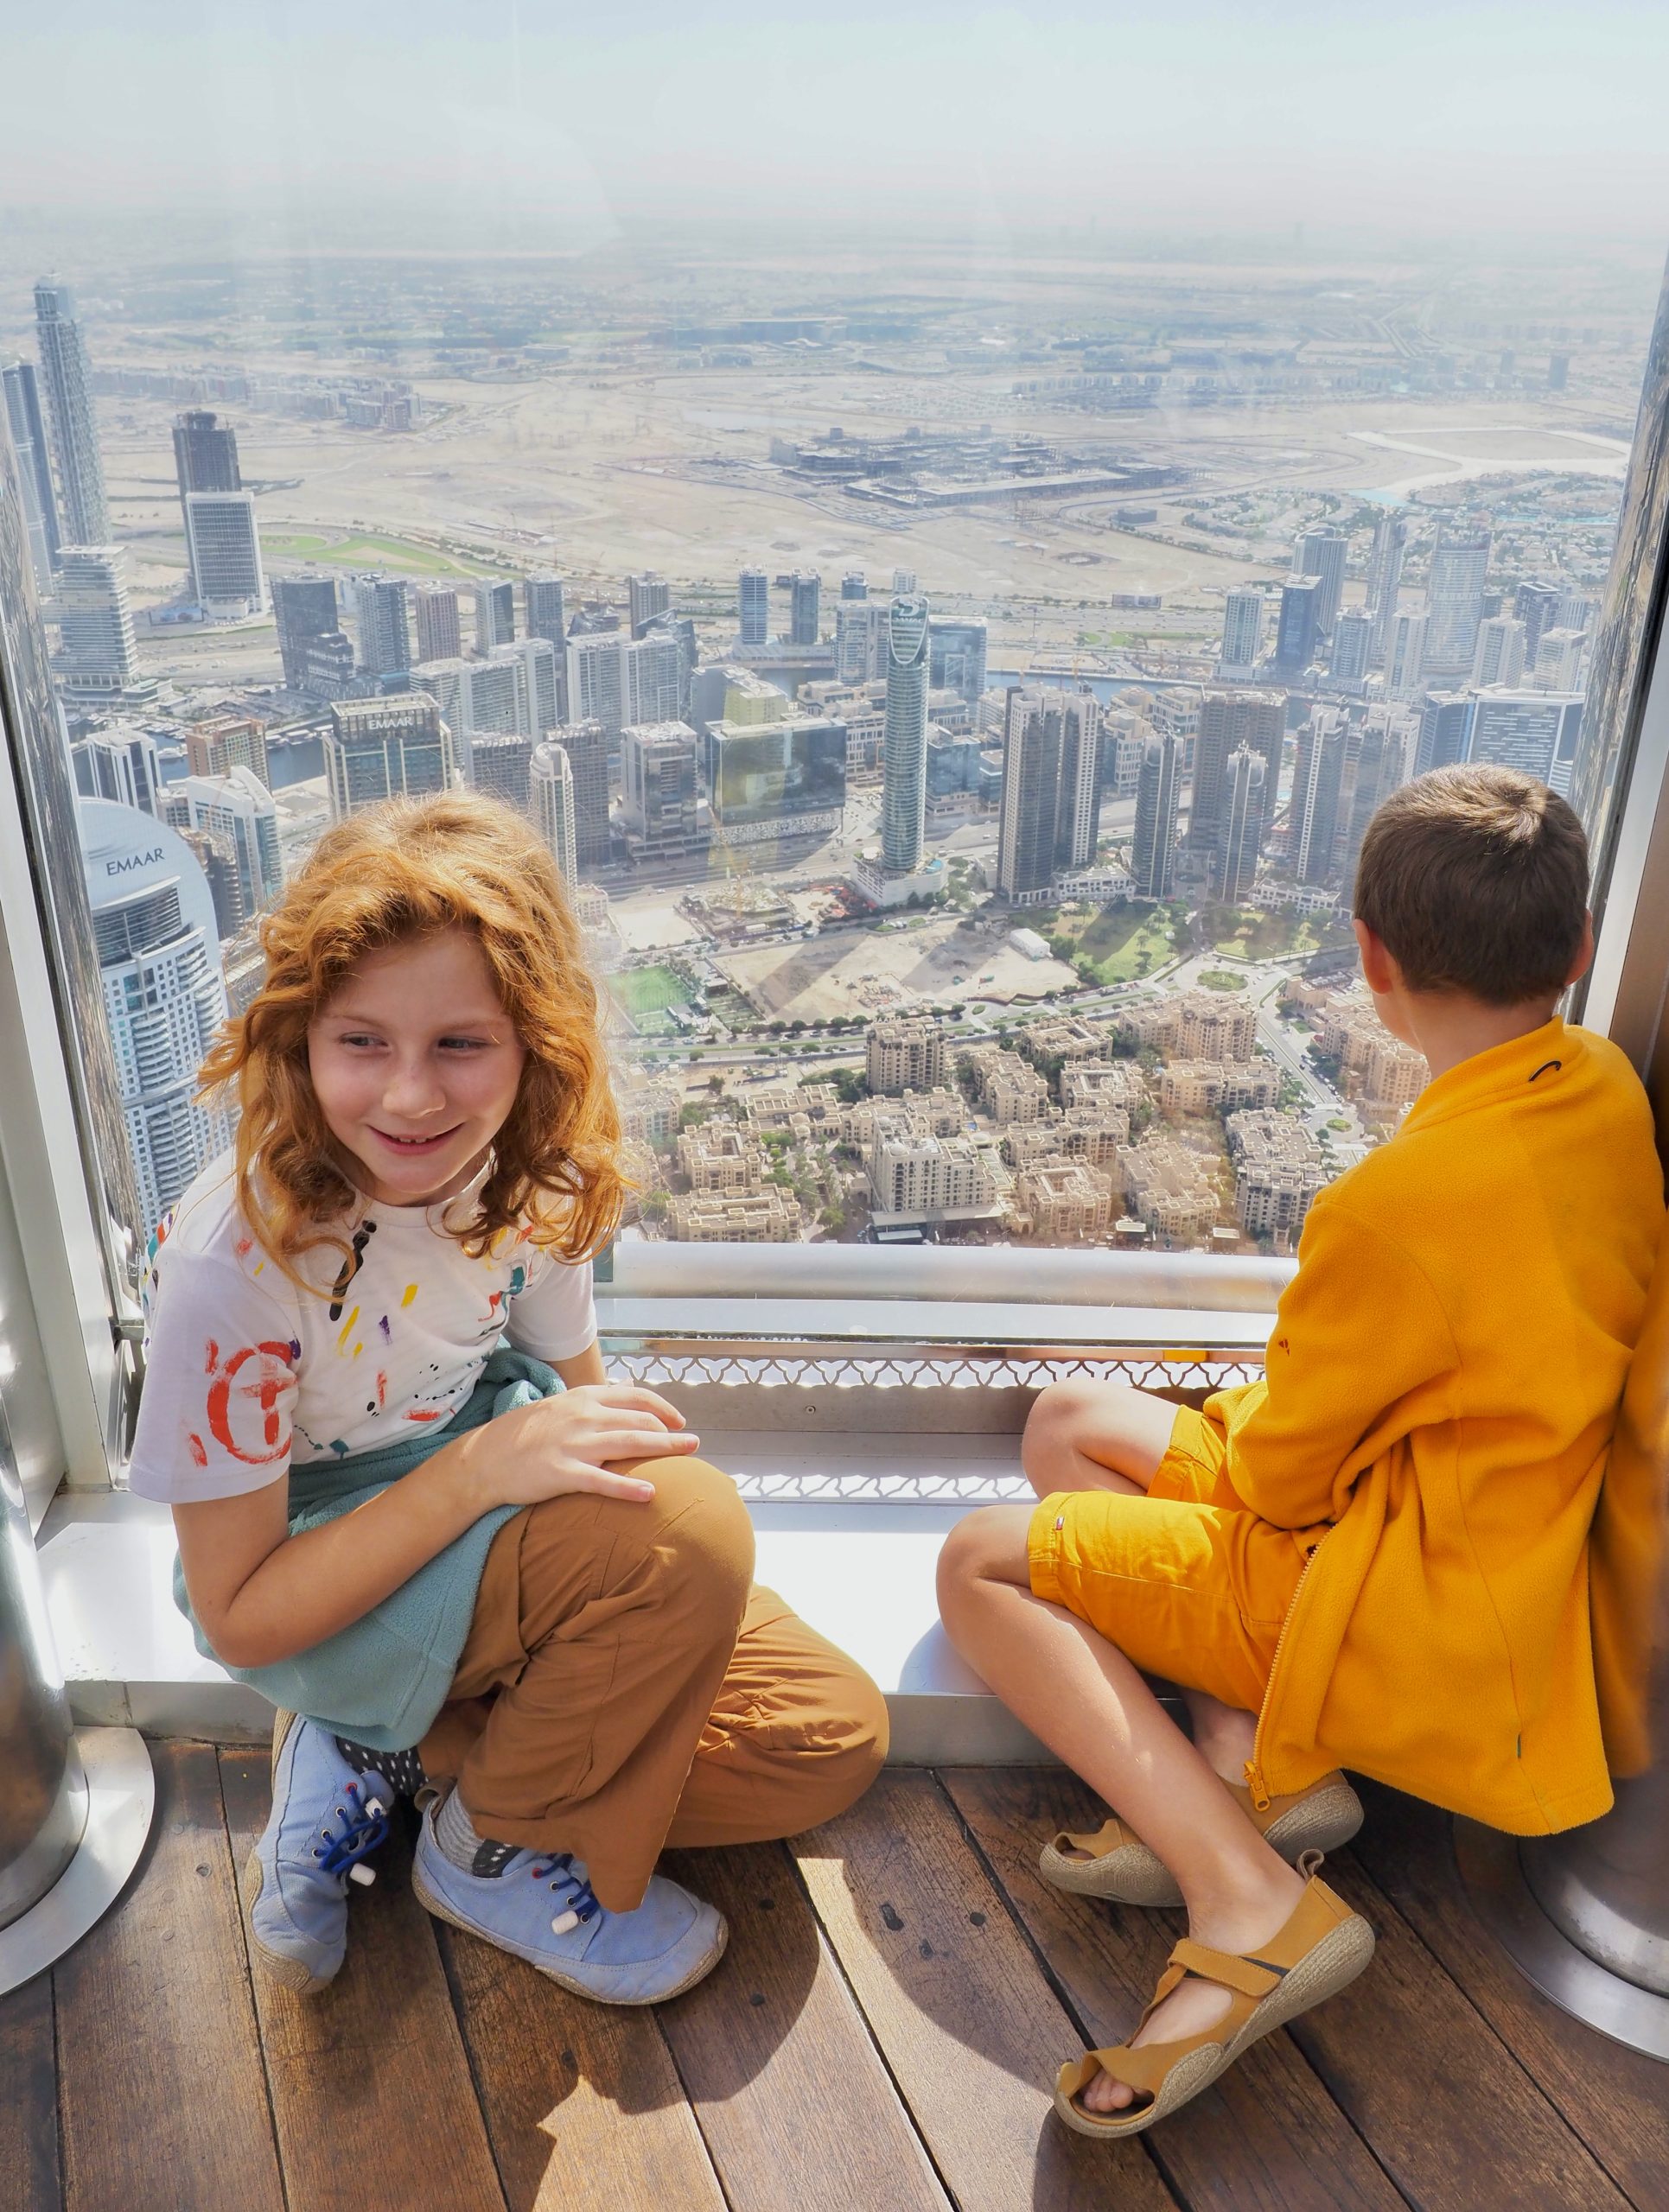 Arabische Emirate / Dubai Mall & Burj Khalifa